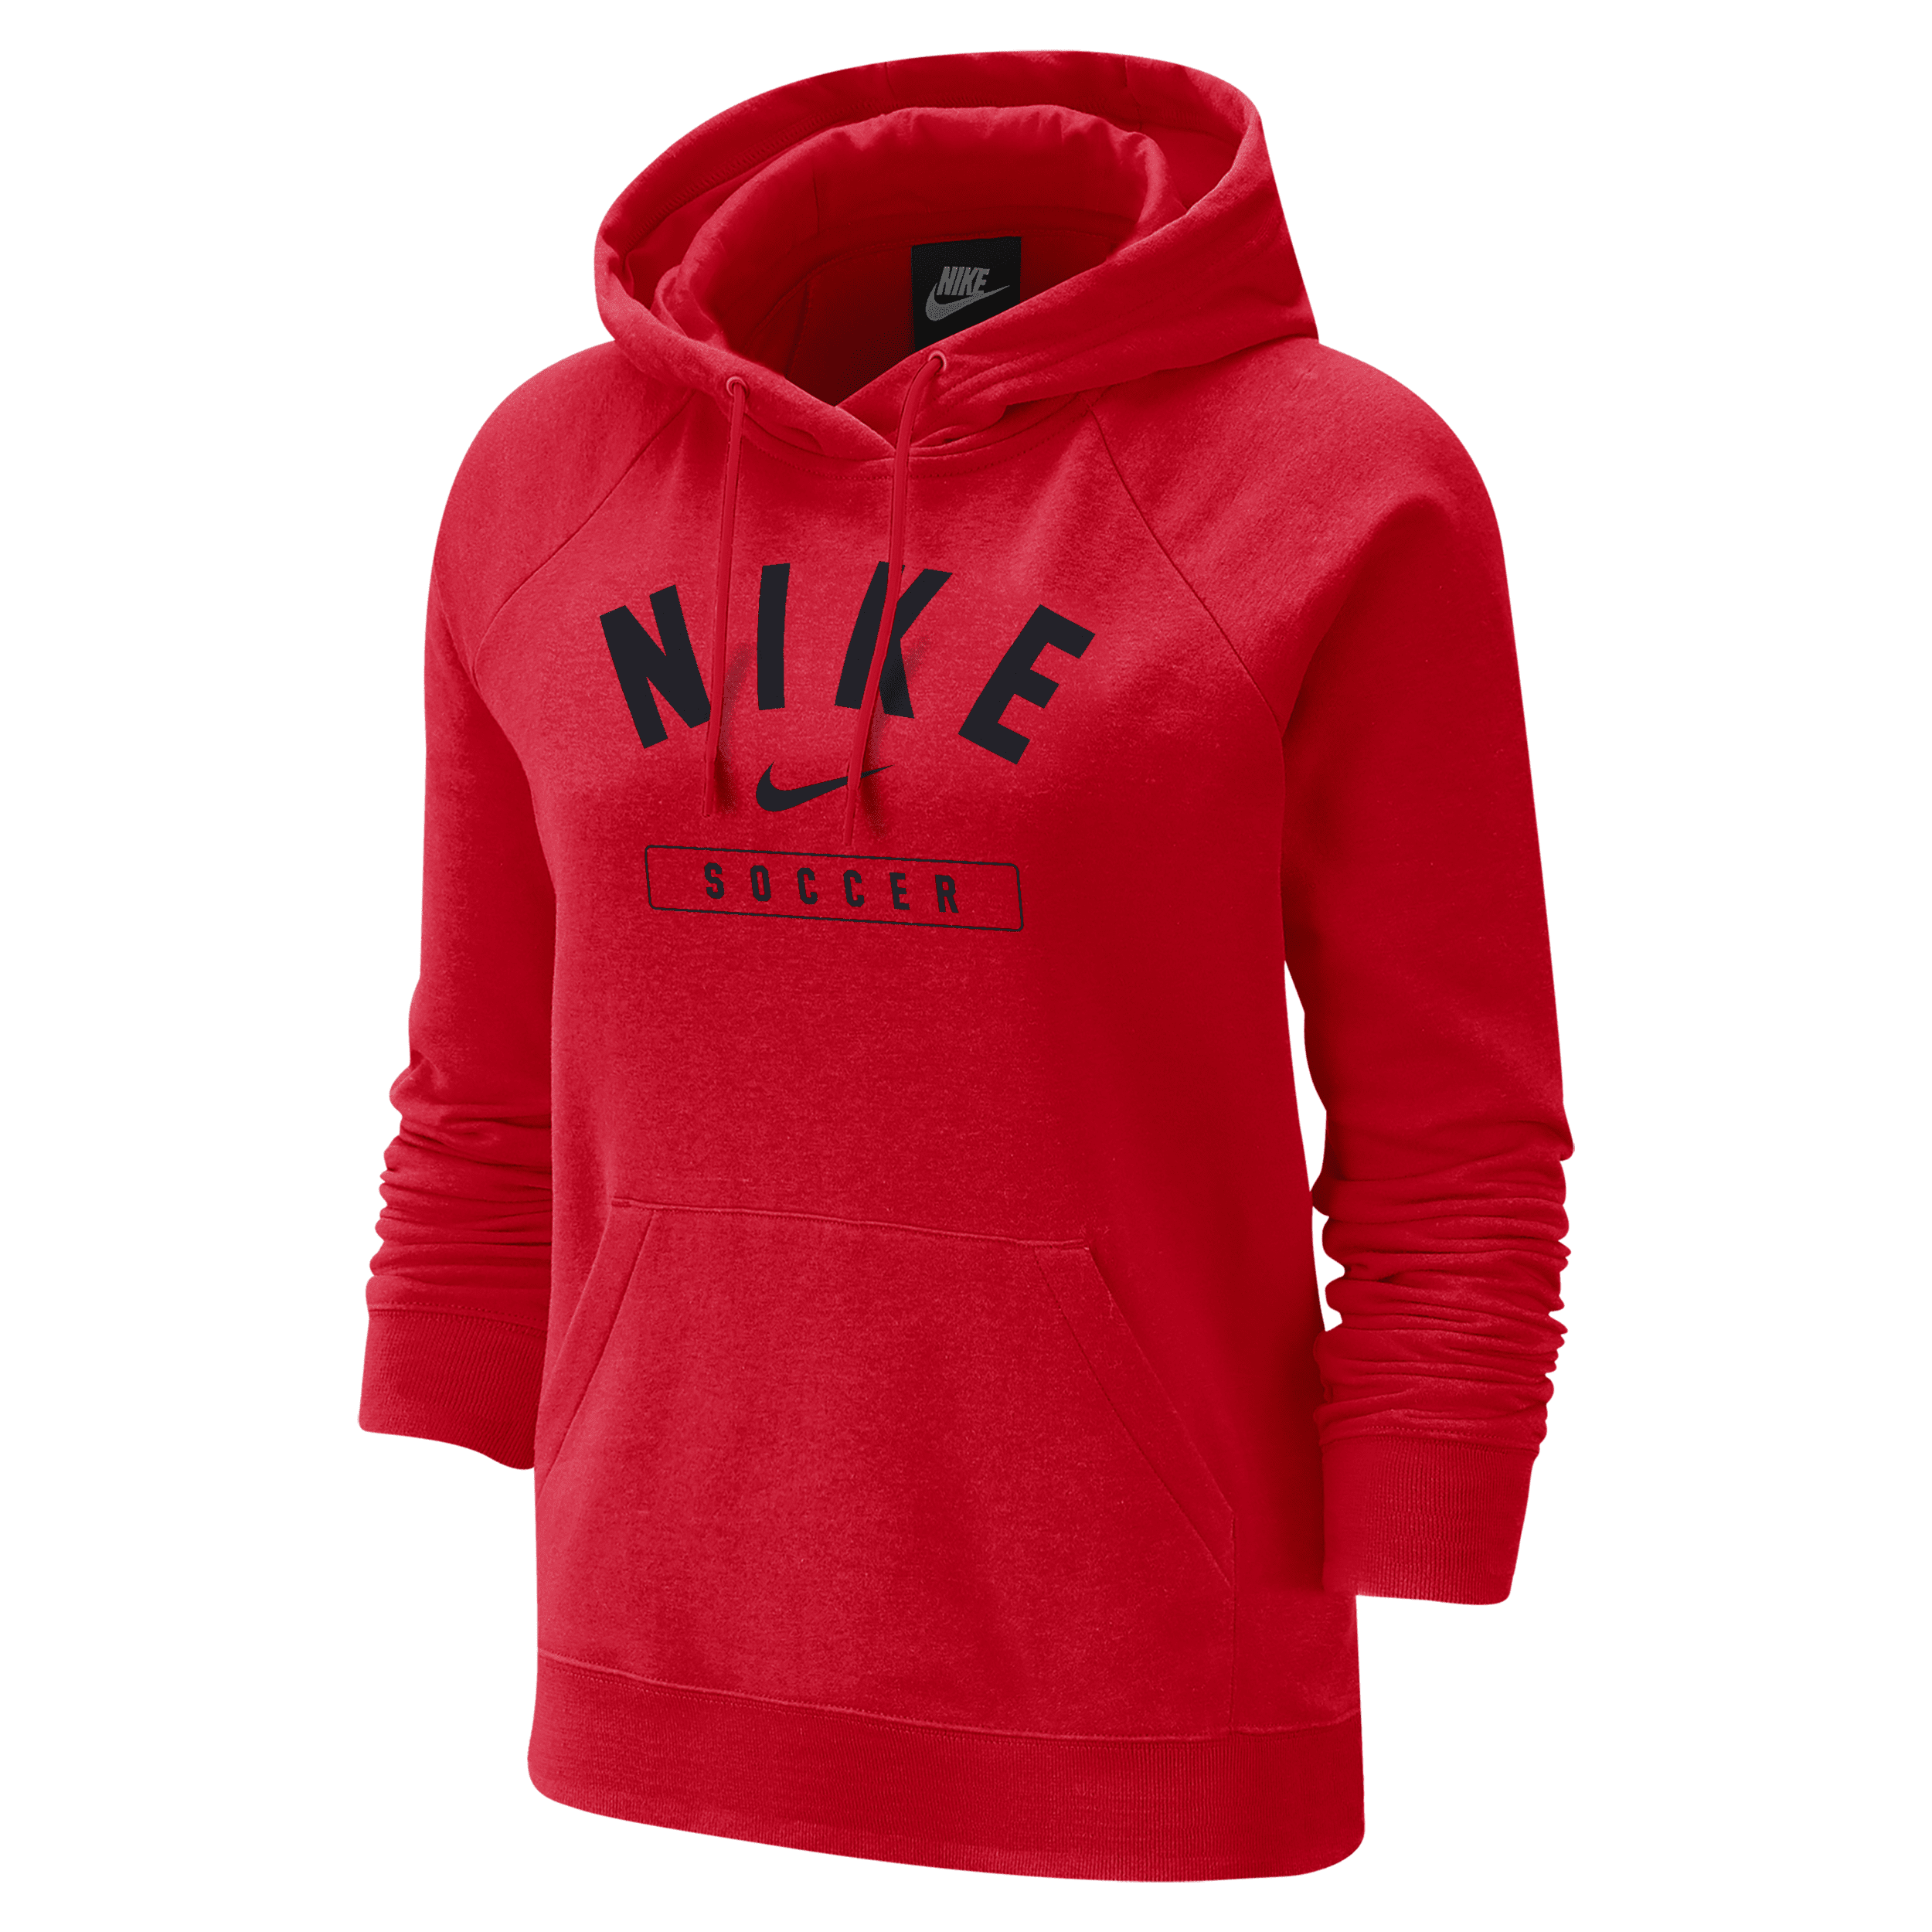 Nike Women's Soccer Pullover Hoodie In Red